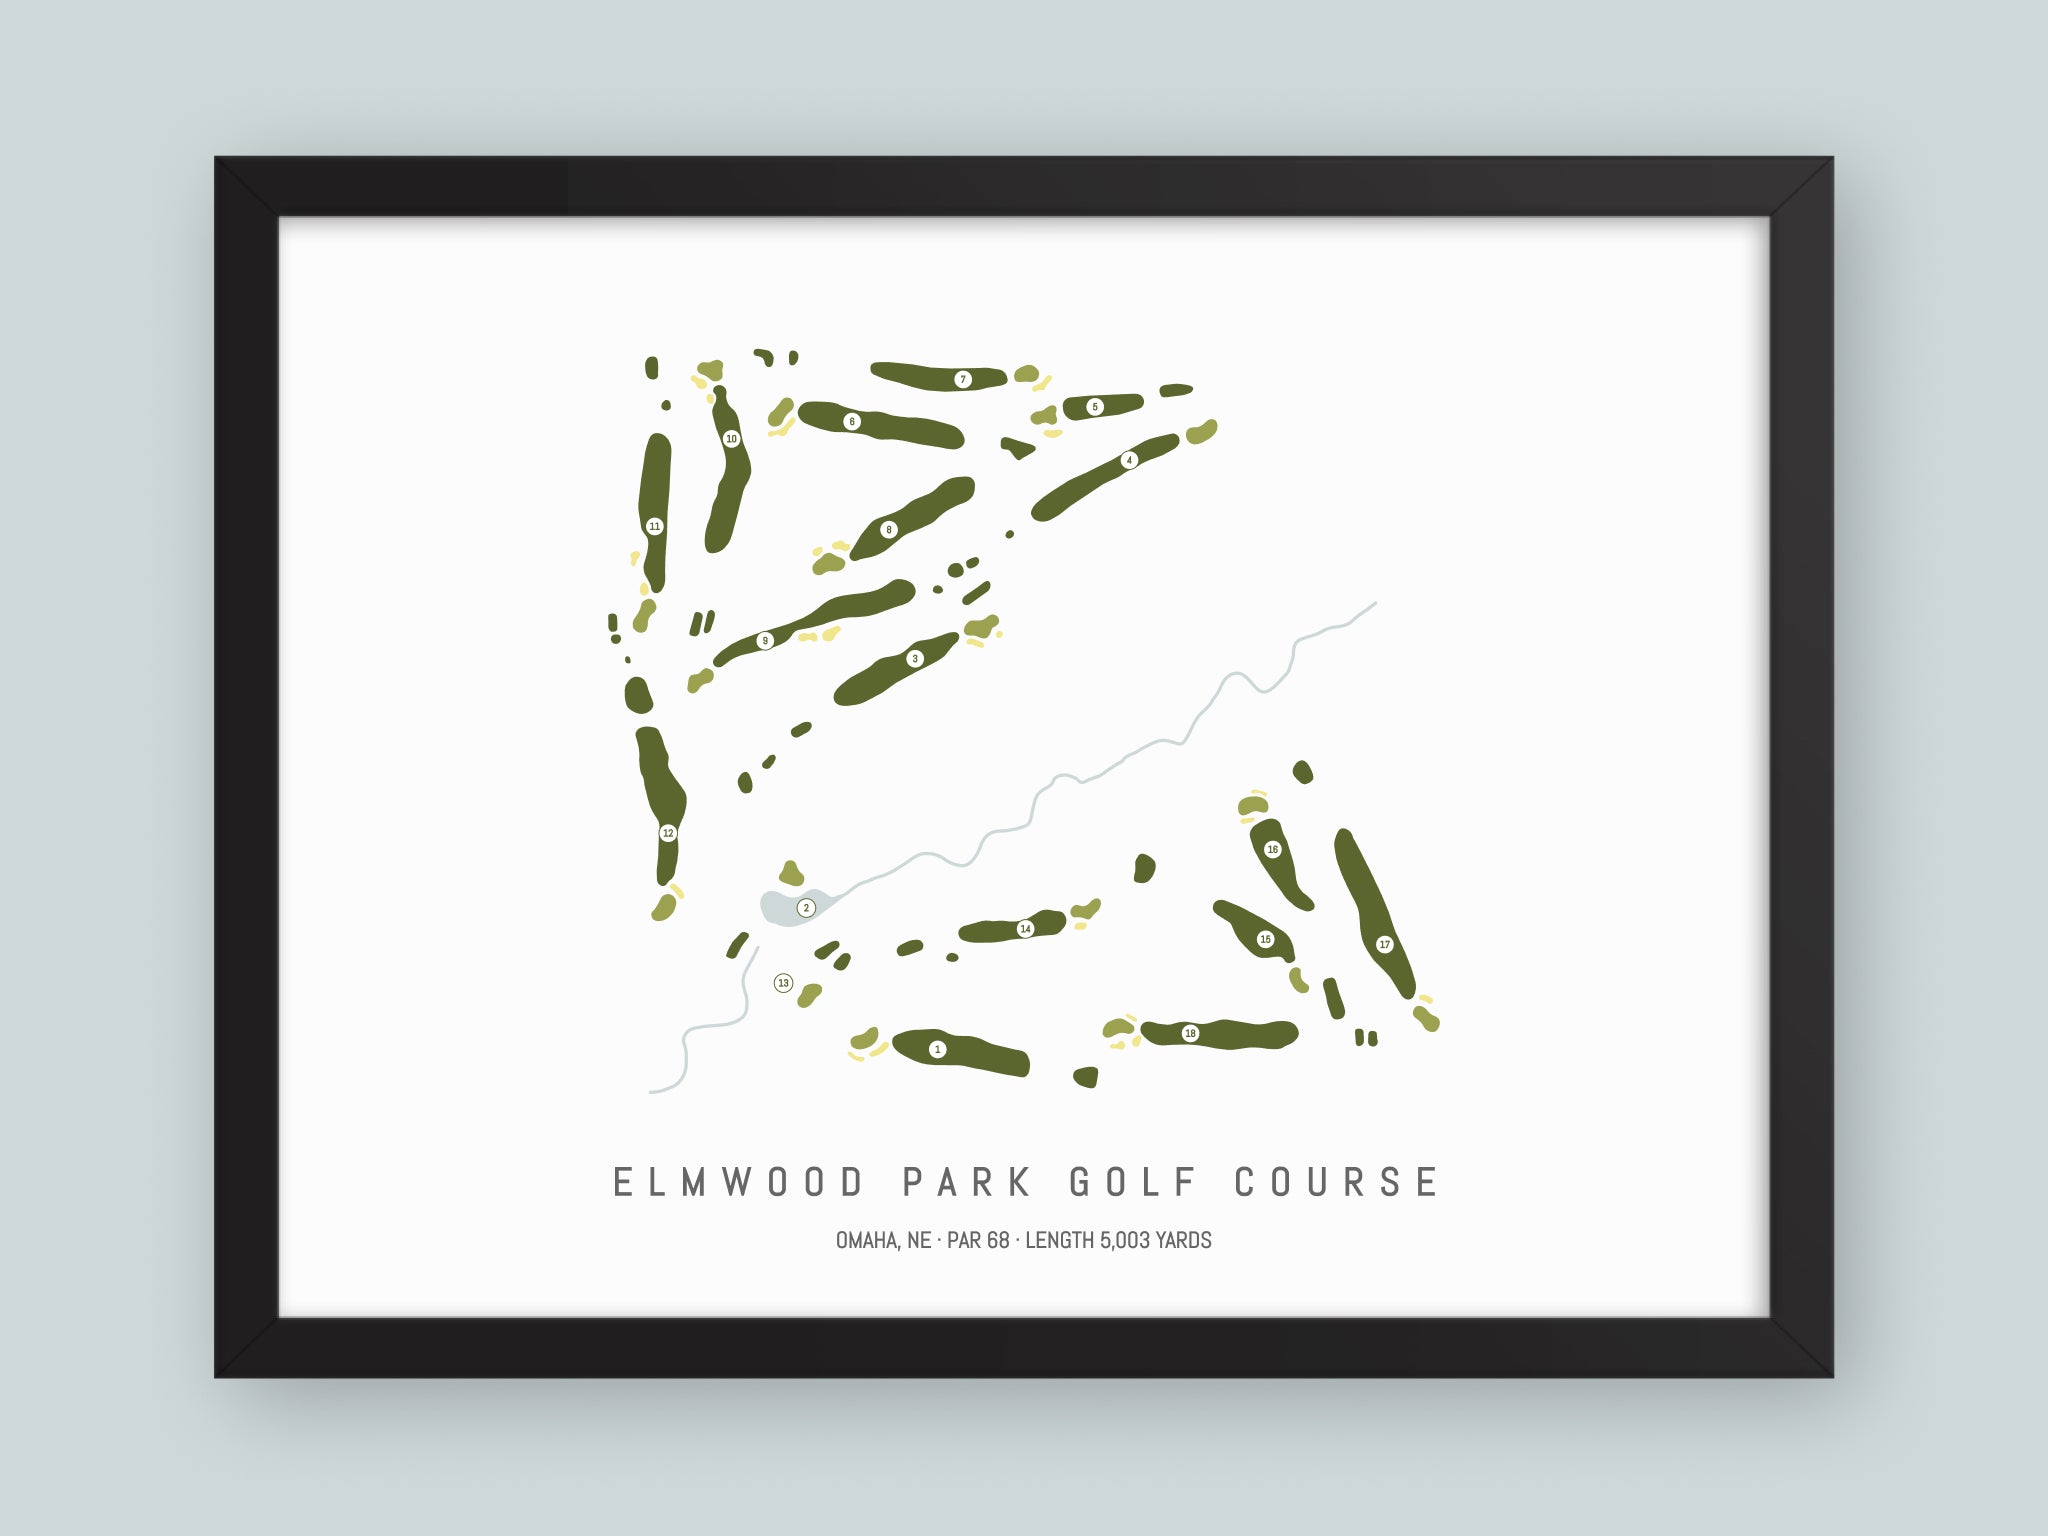 Elmwood-Park-Golf-Course-NE--Black-Frame-24x18-With-Hole-Numbers